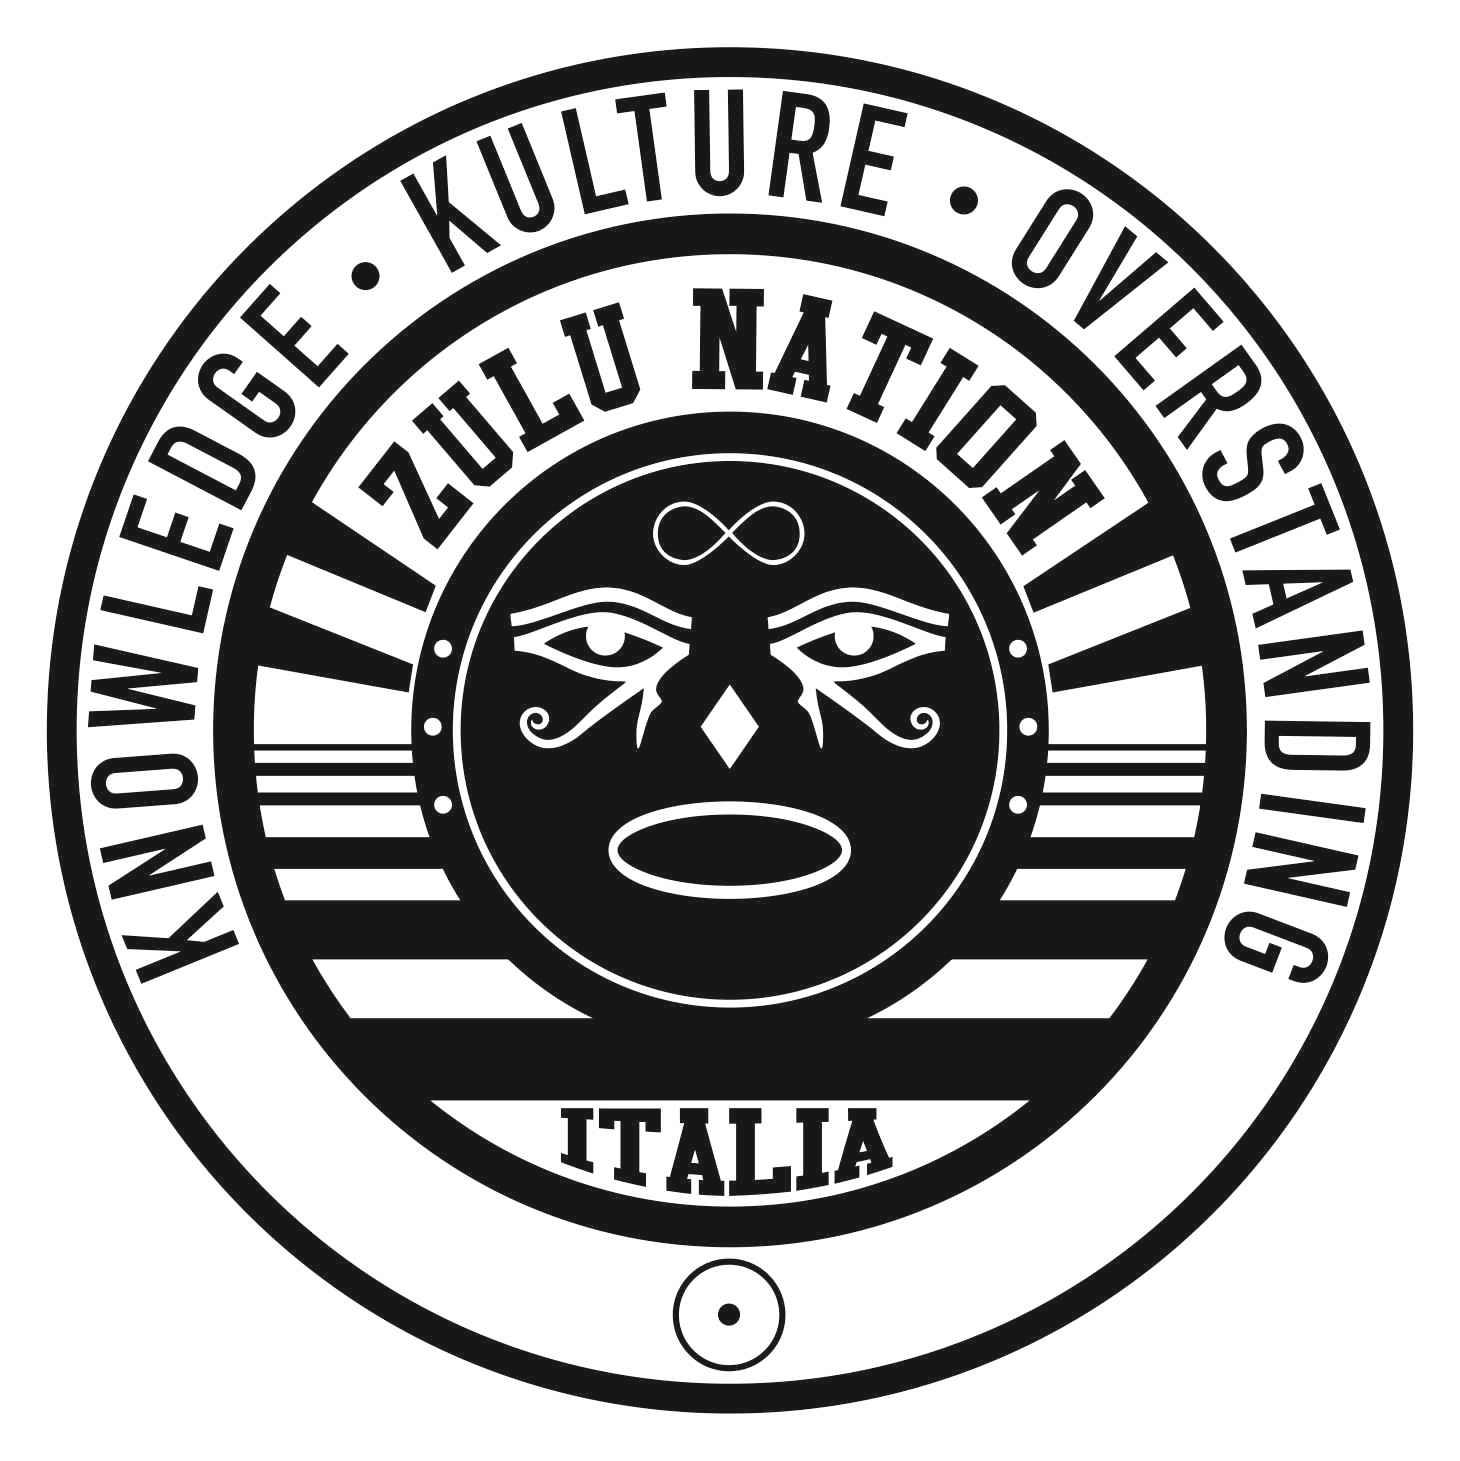 Universal Zulu Nation Chapter Italy